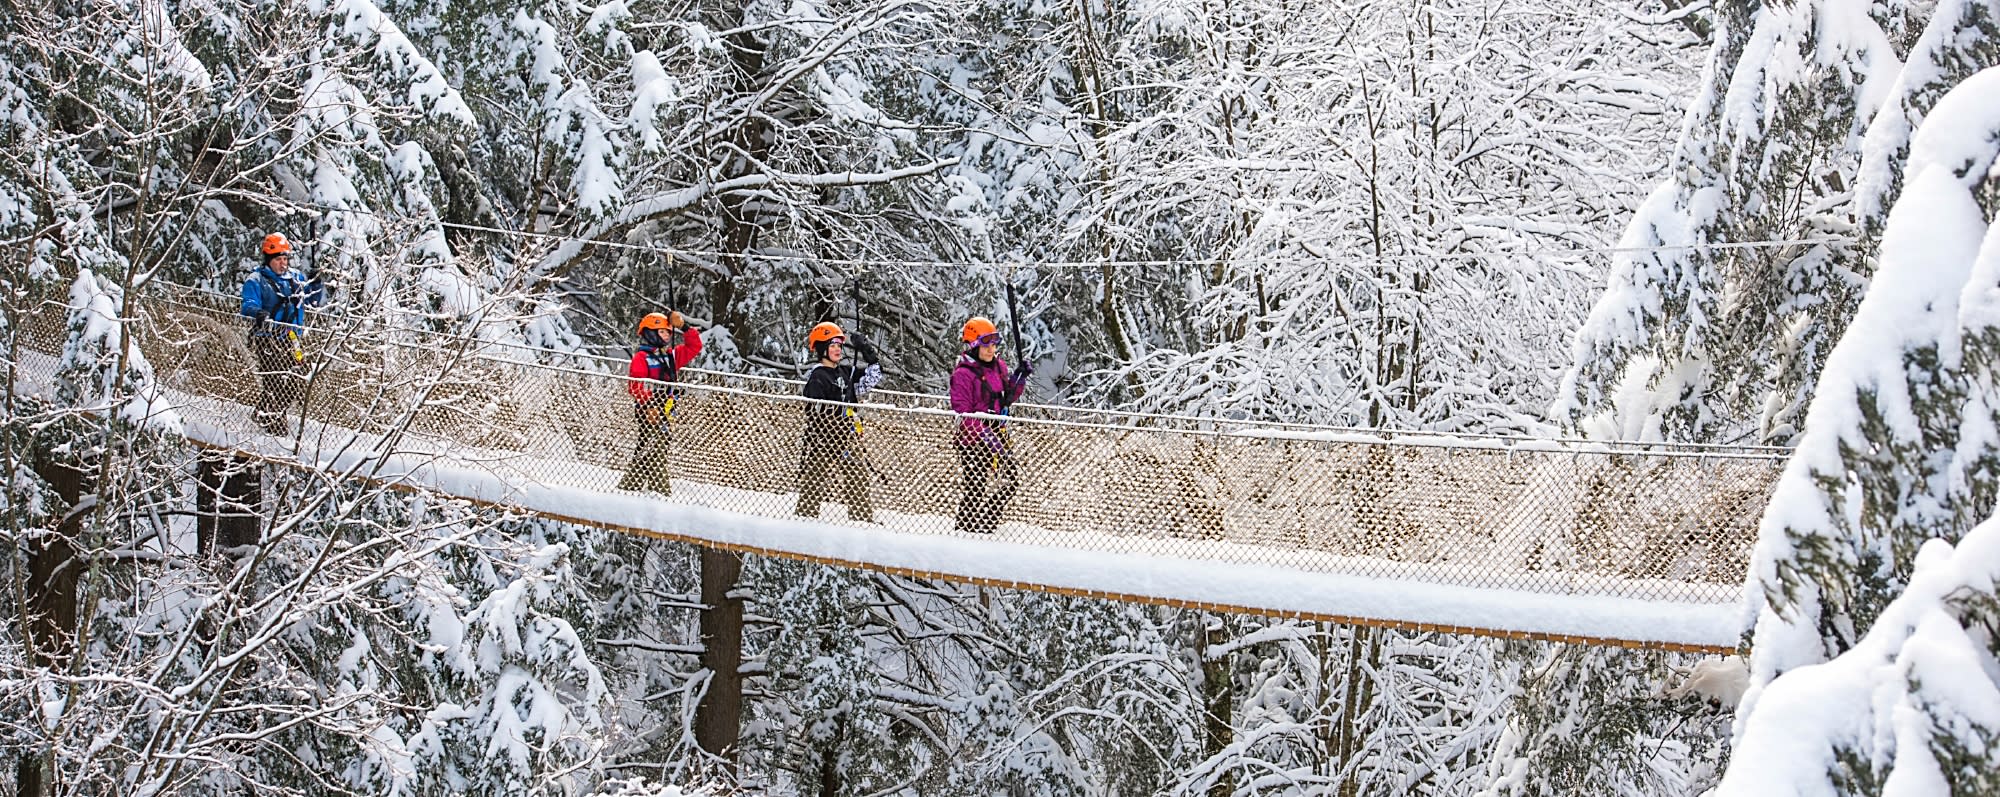 Bristol Mountain Ski Center Aerial Adventure Park and Zip Line Canopy Tours